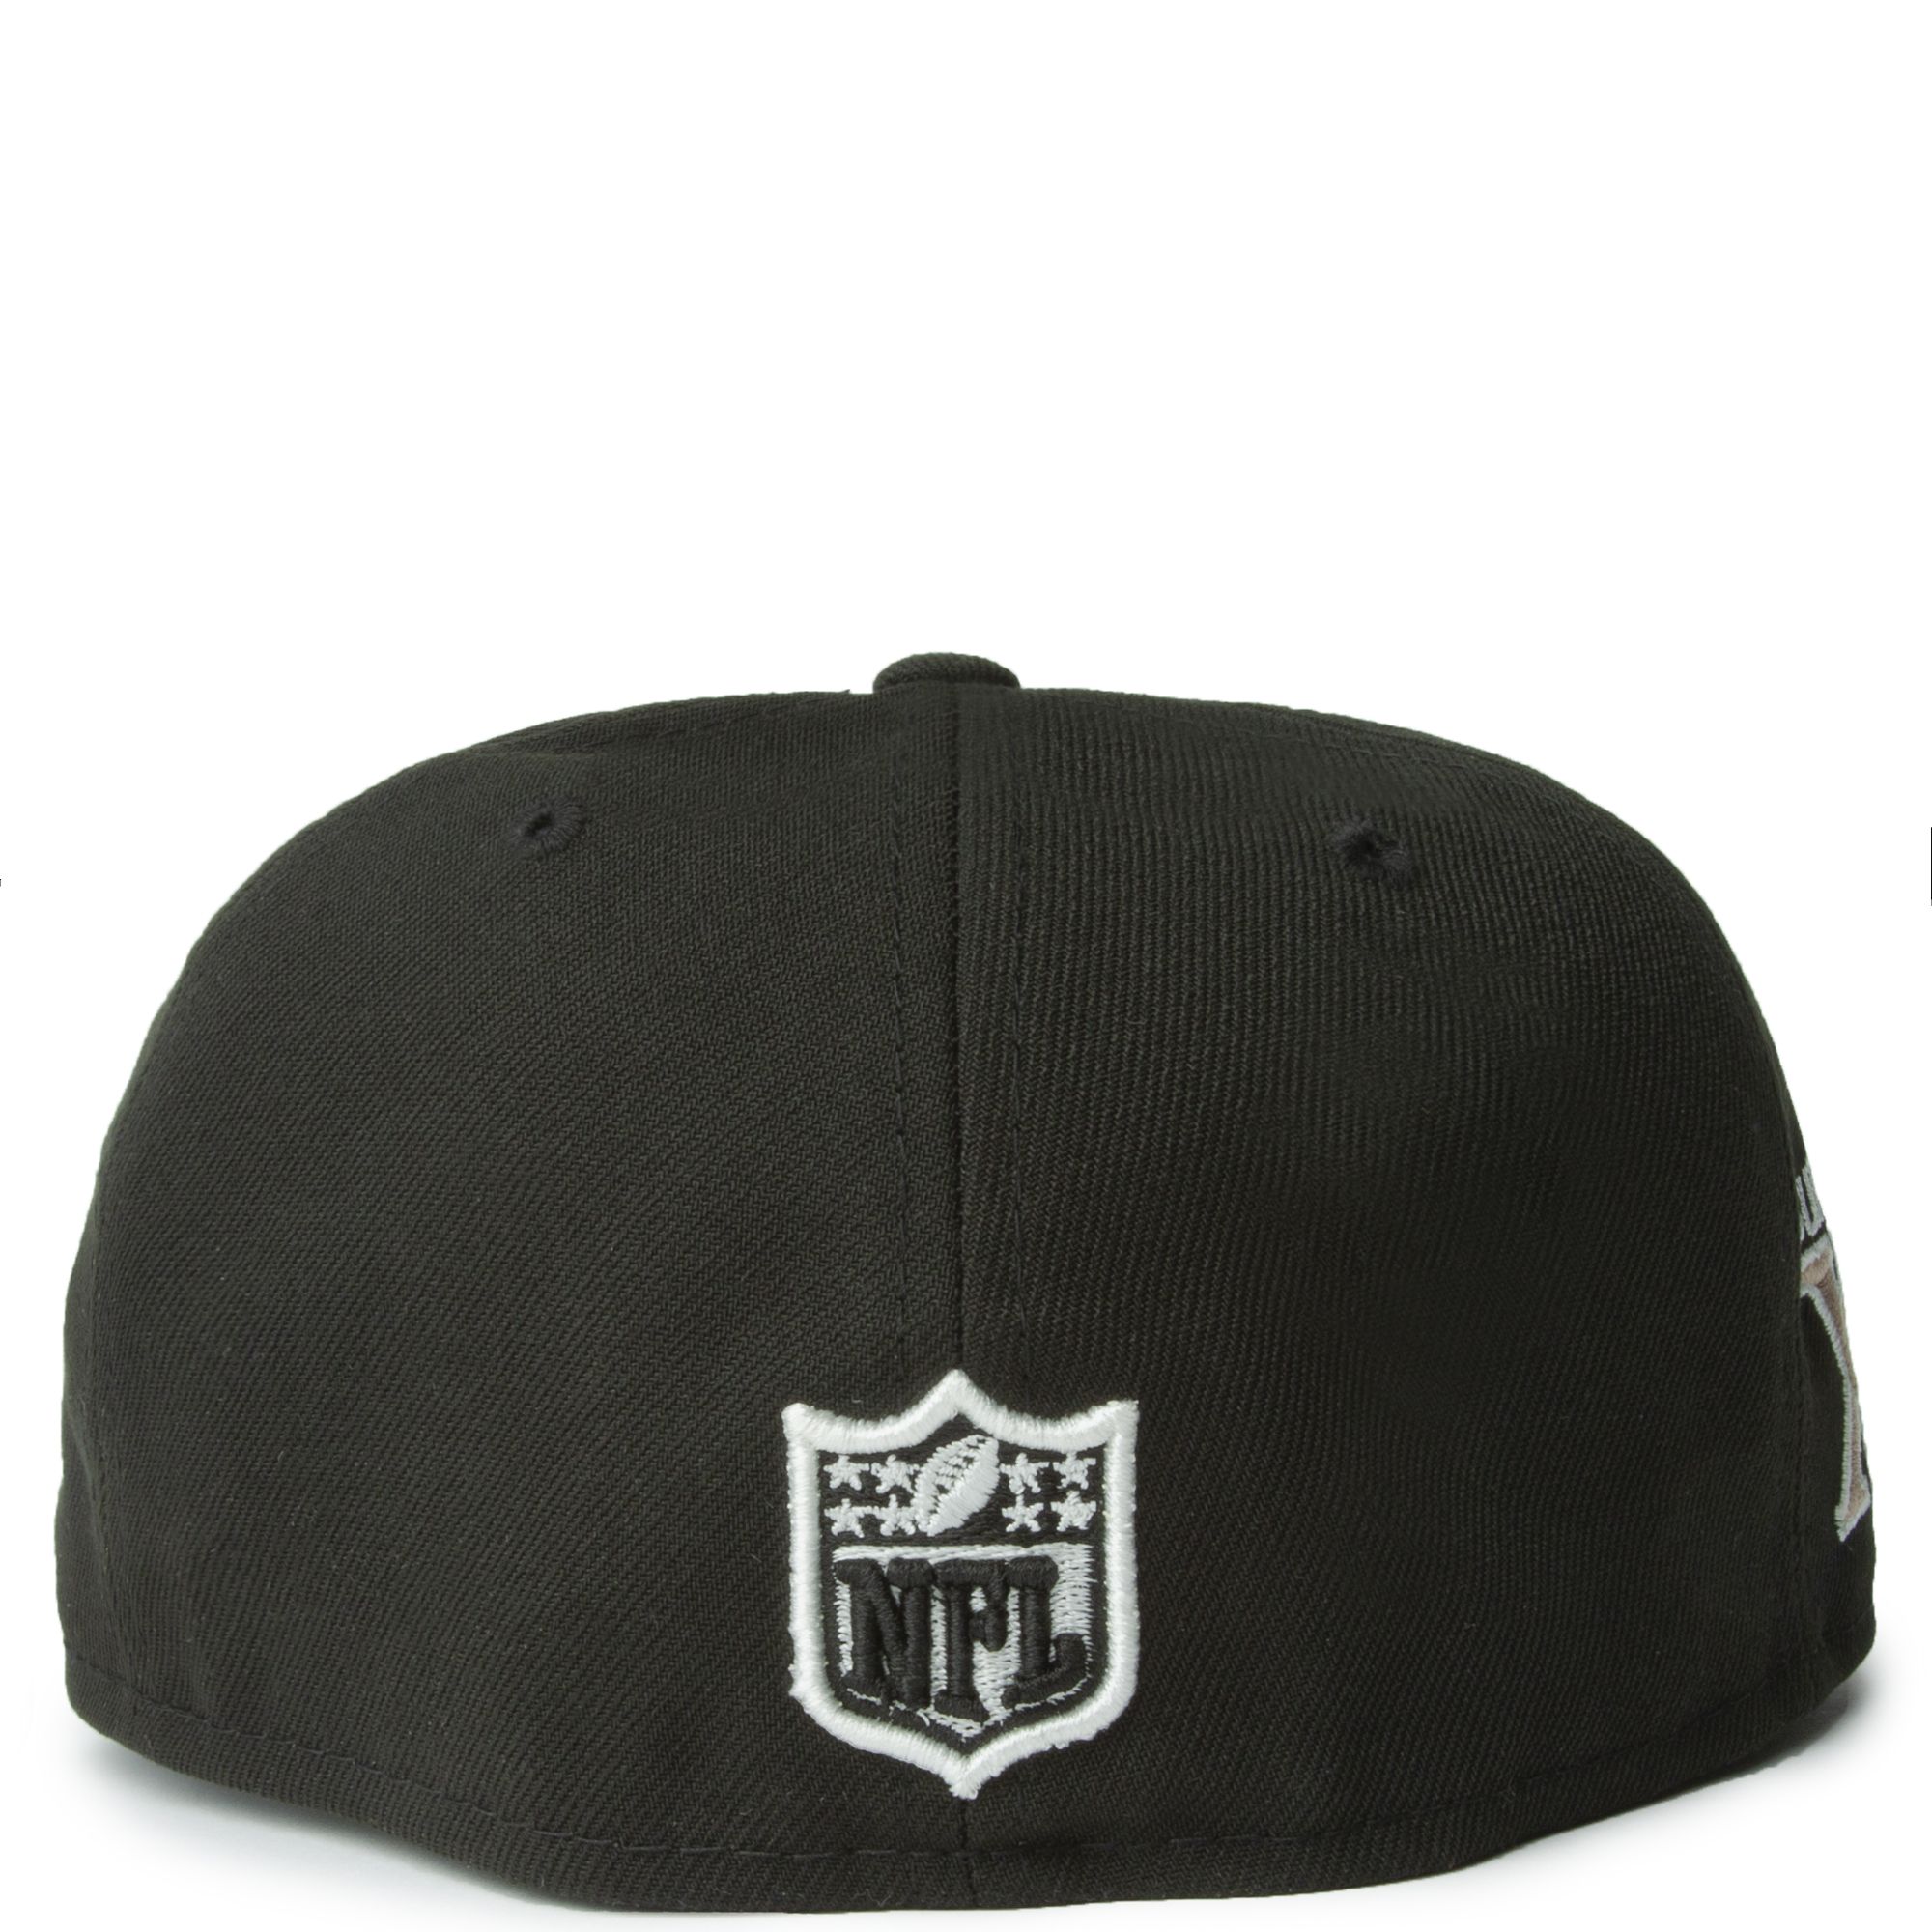 NEW ERA CAPS Las Vegas Raiders Super Bowl XV 59FIFTY Fitted Hat 70715253 -  Shiekh